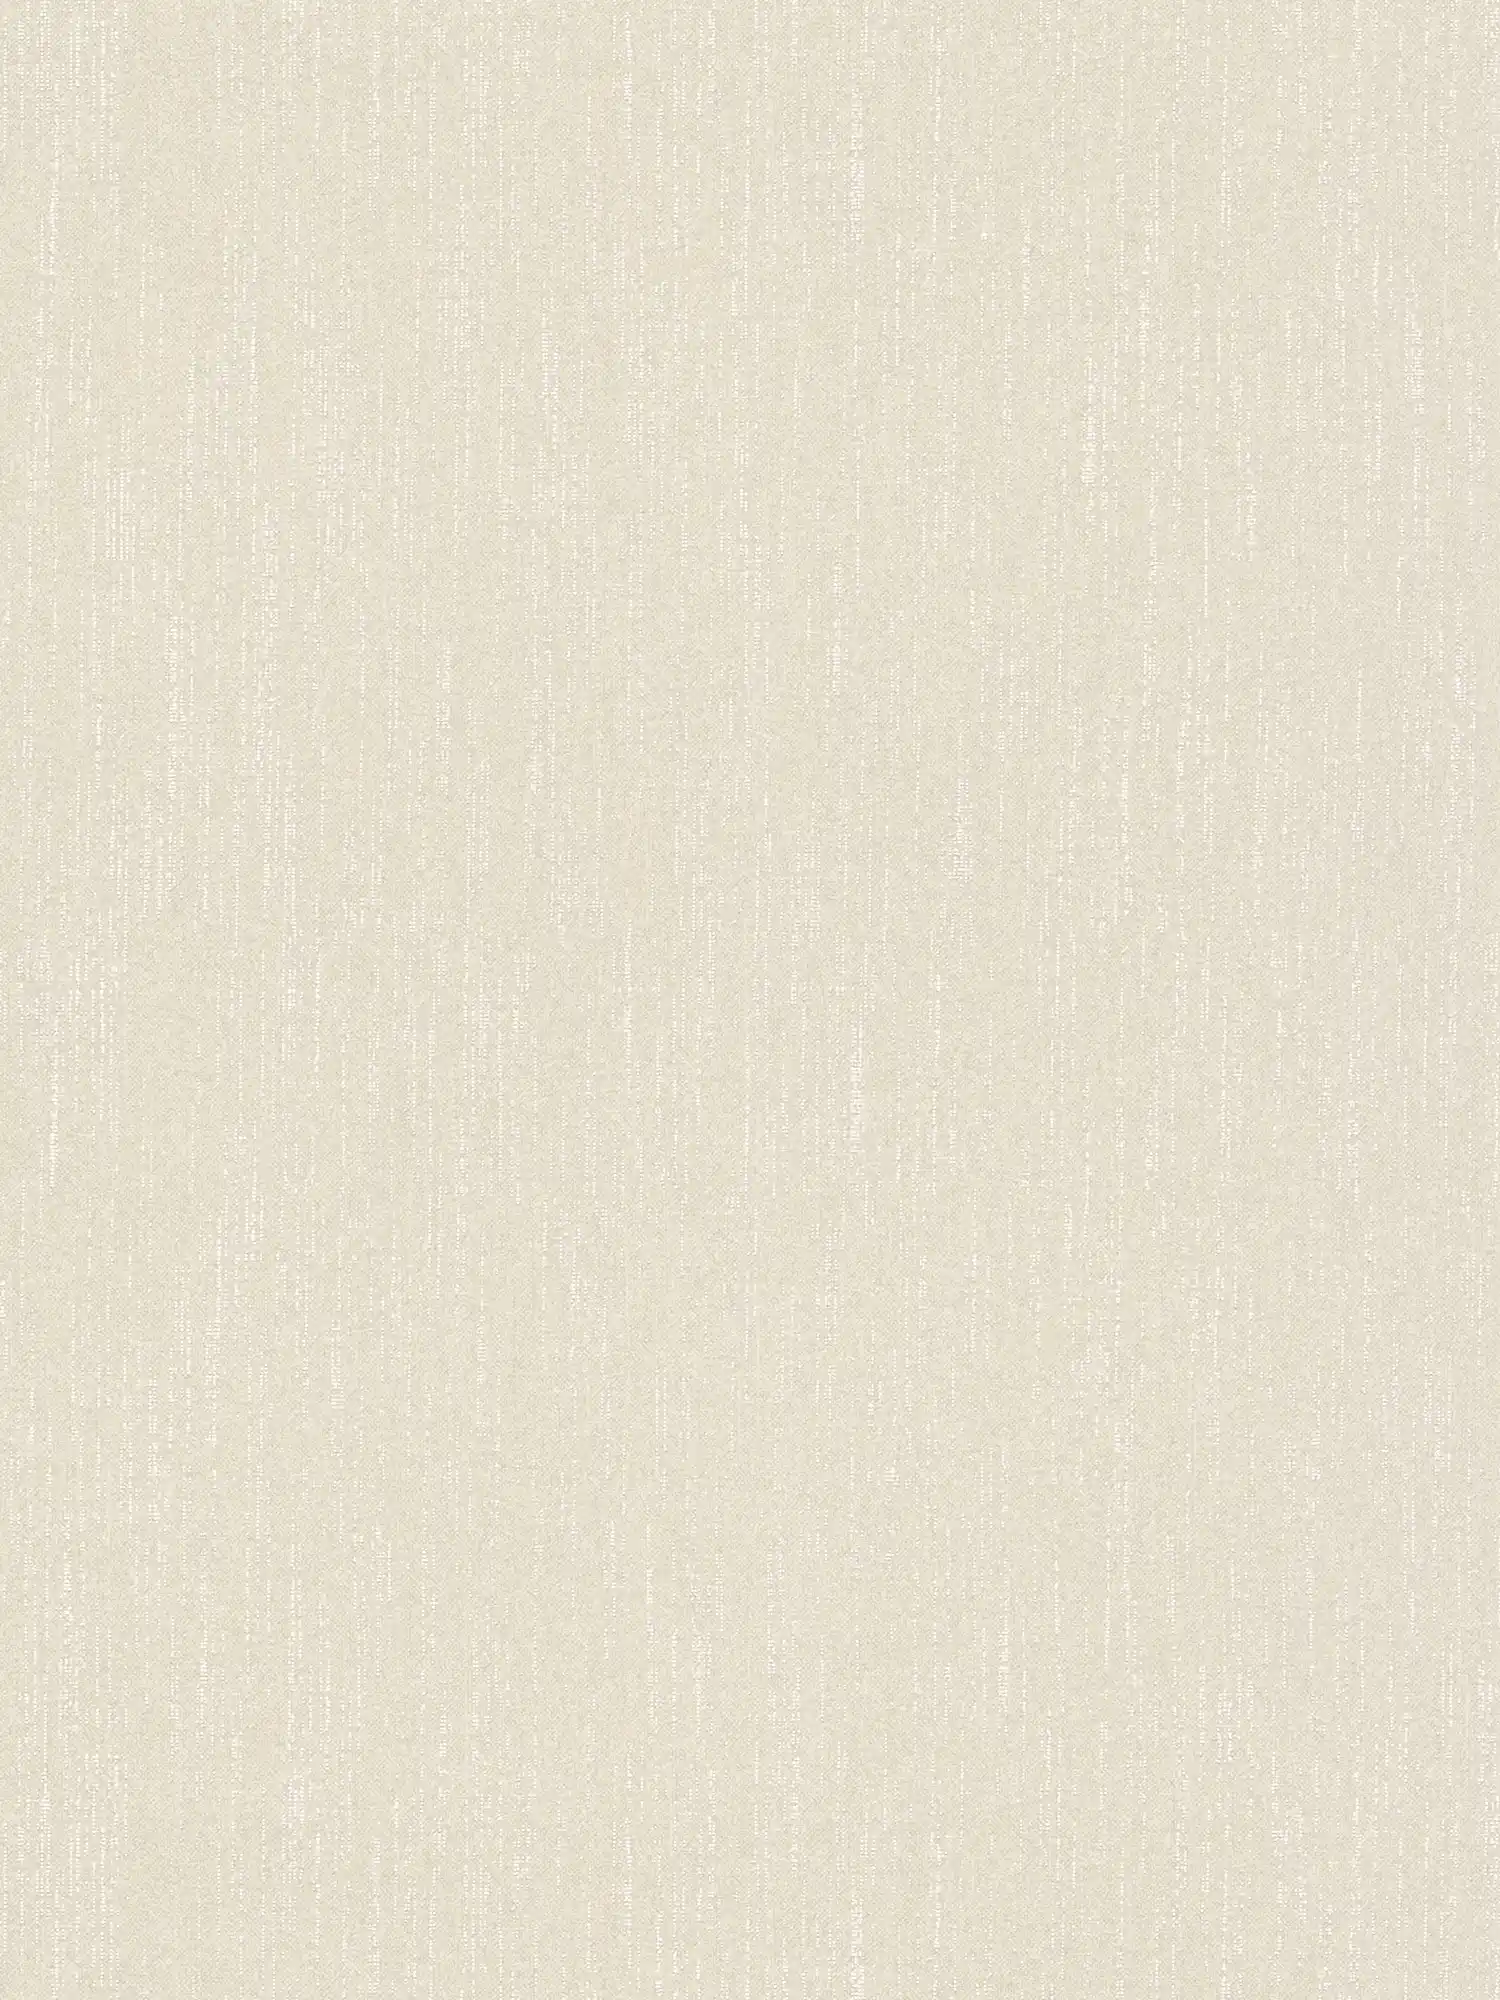 Gloss wallpaper cream white with textile optics & shimmer effect - white
